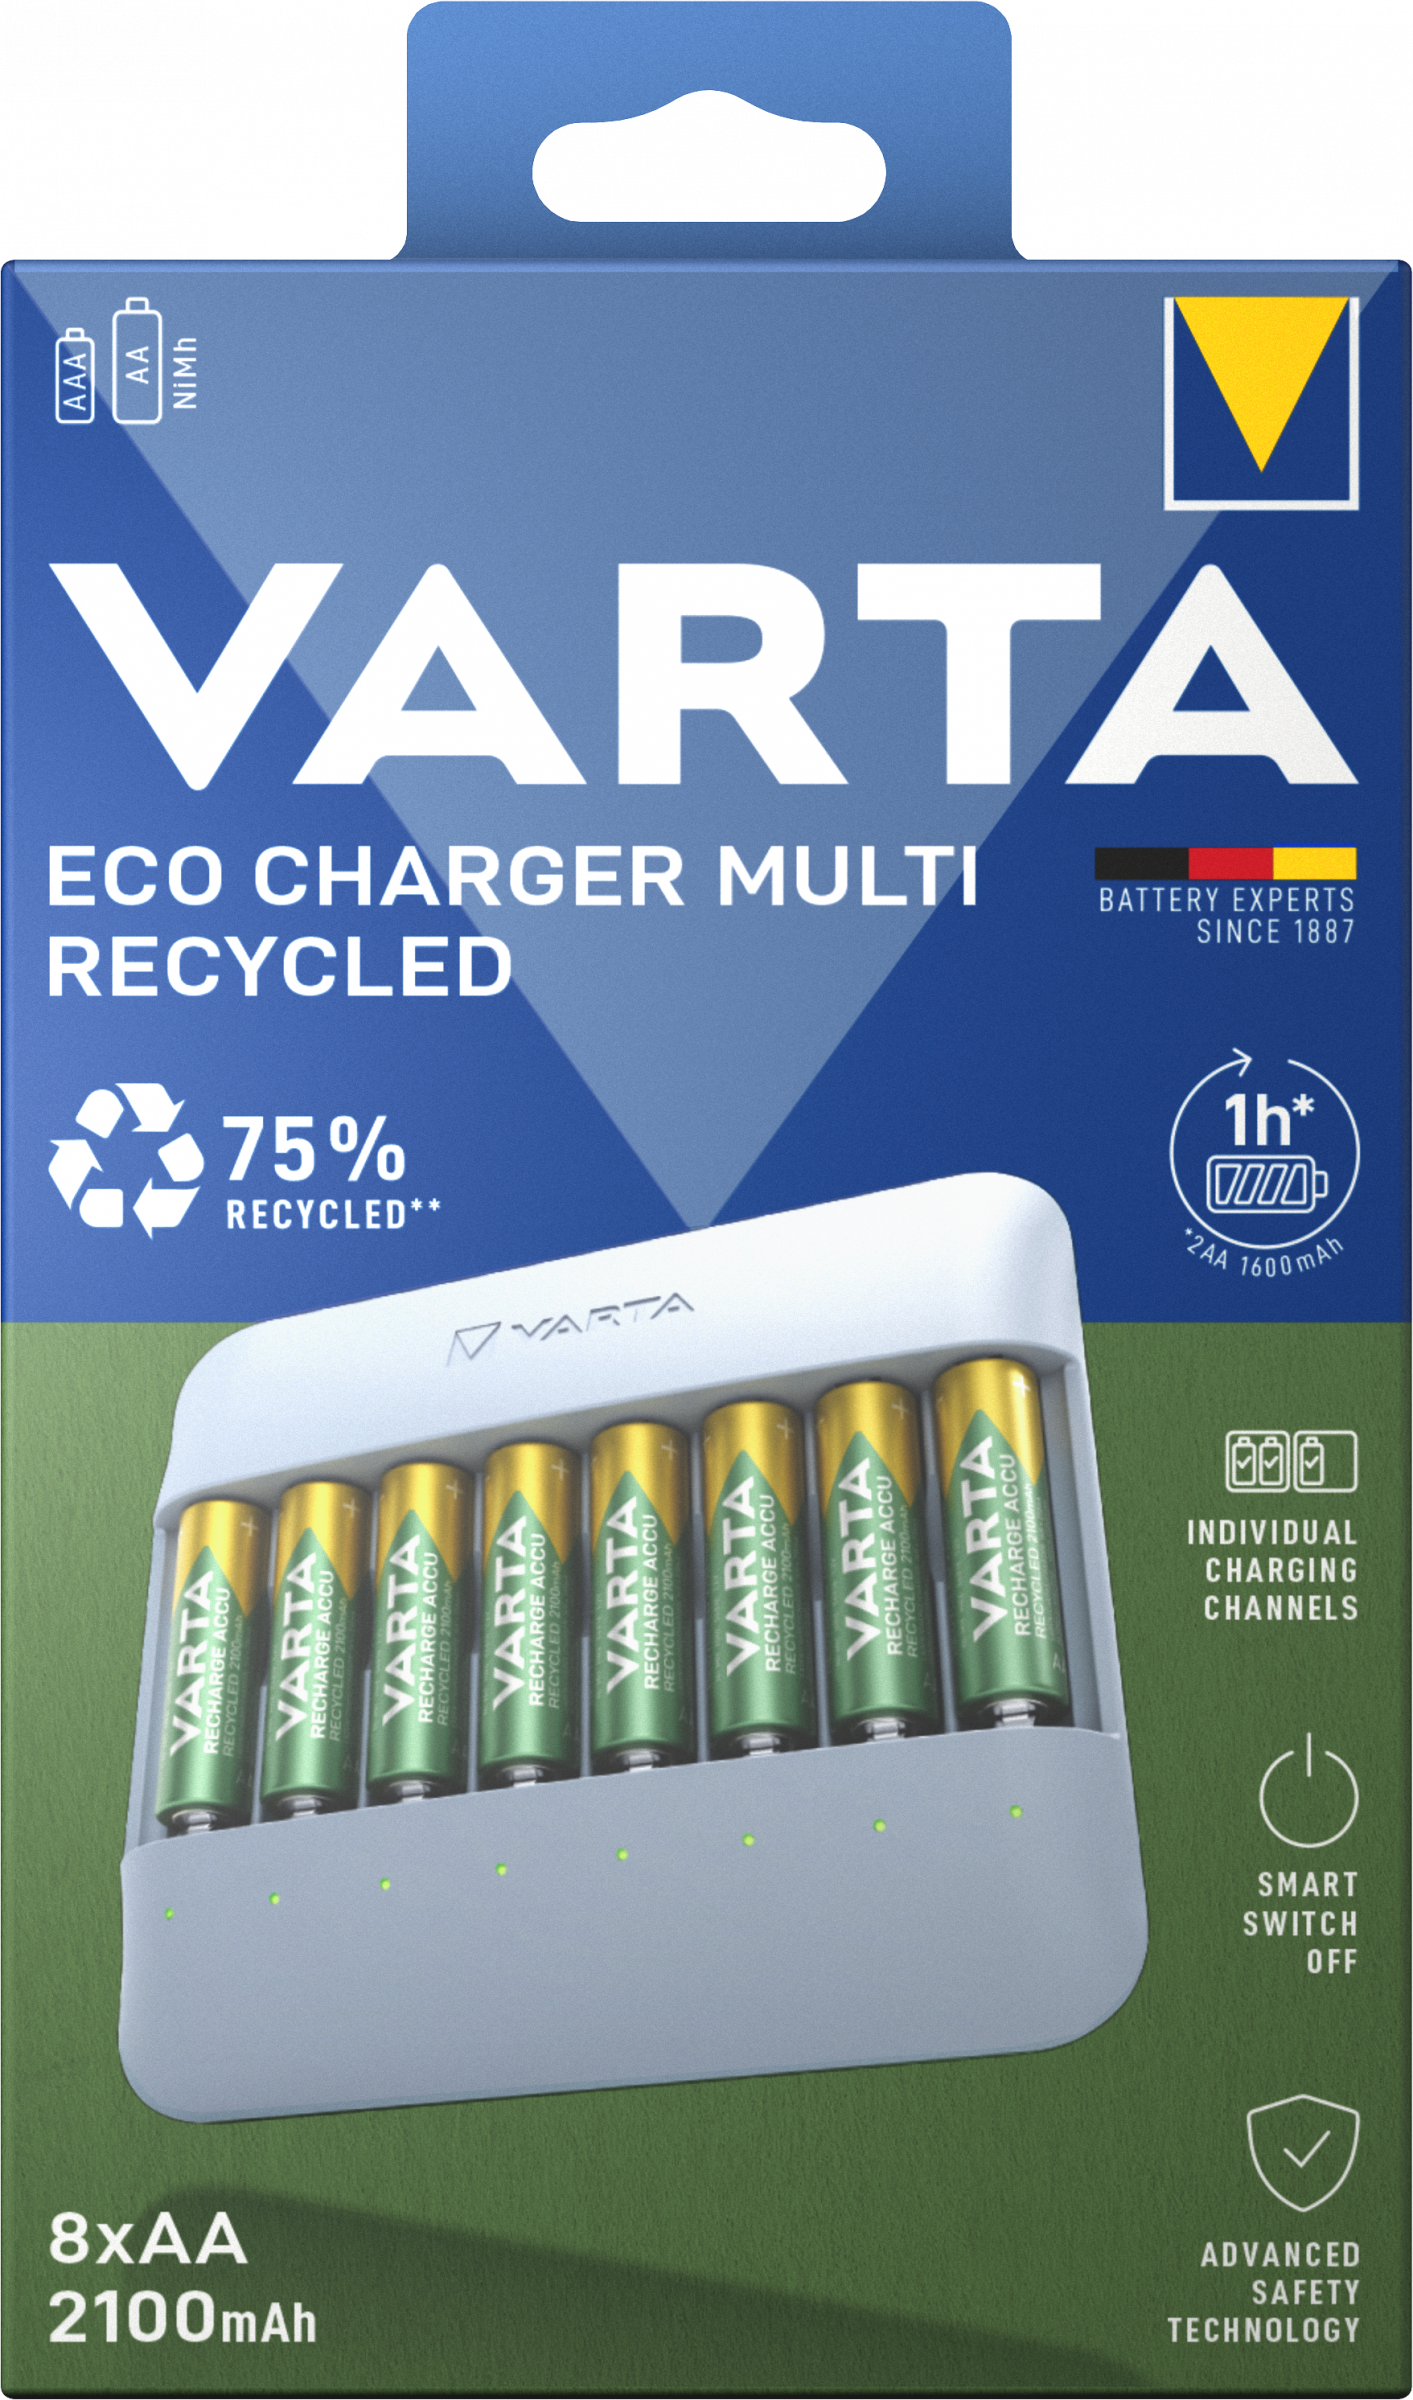 Varta Eco Charger Multi Recycled inkl. 8x AA  2100mAh